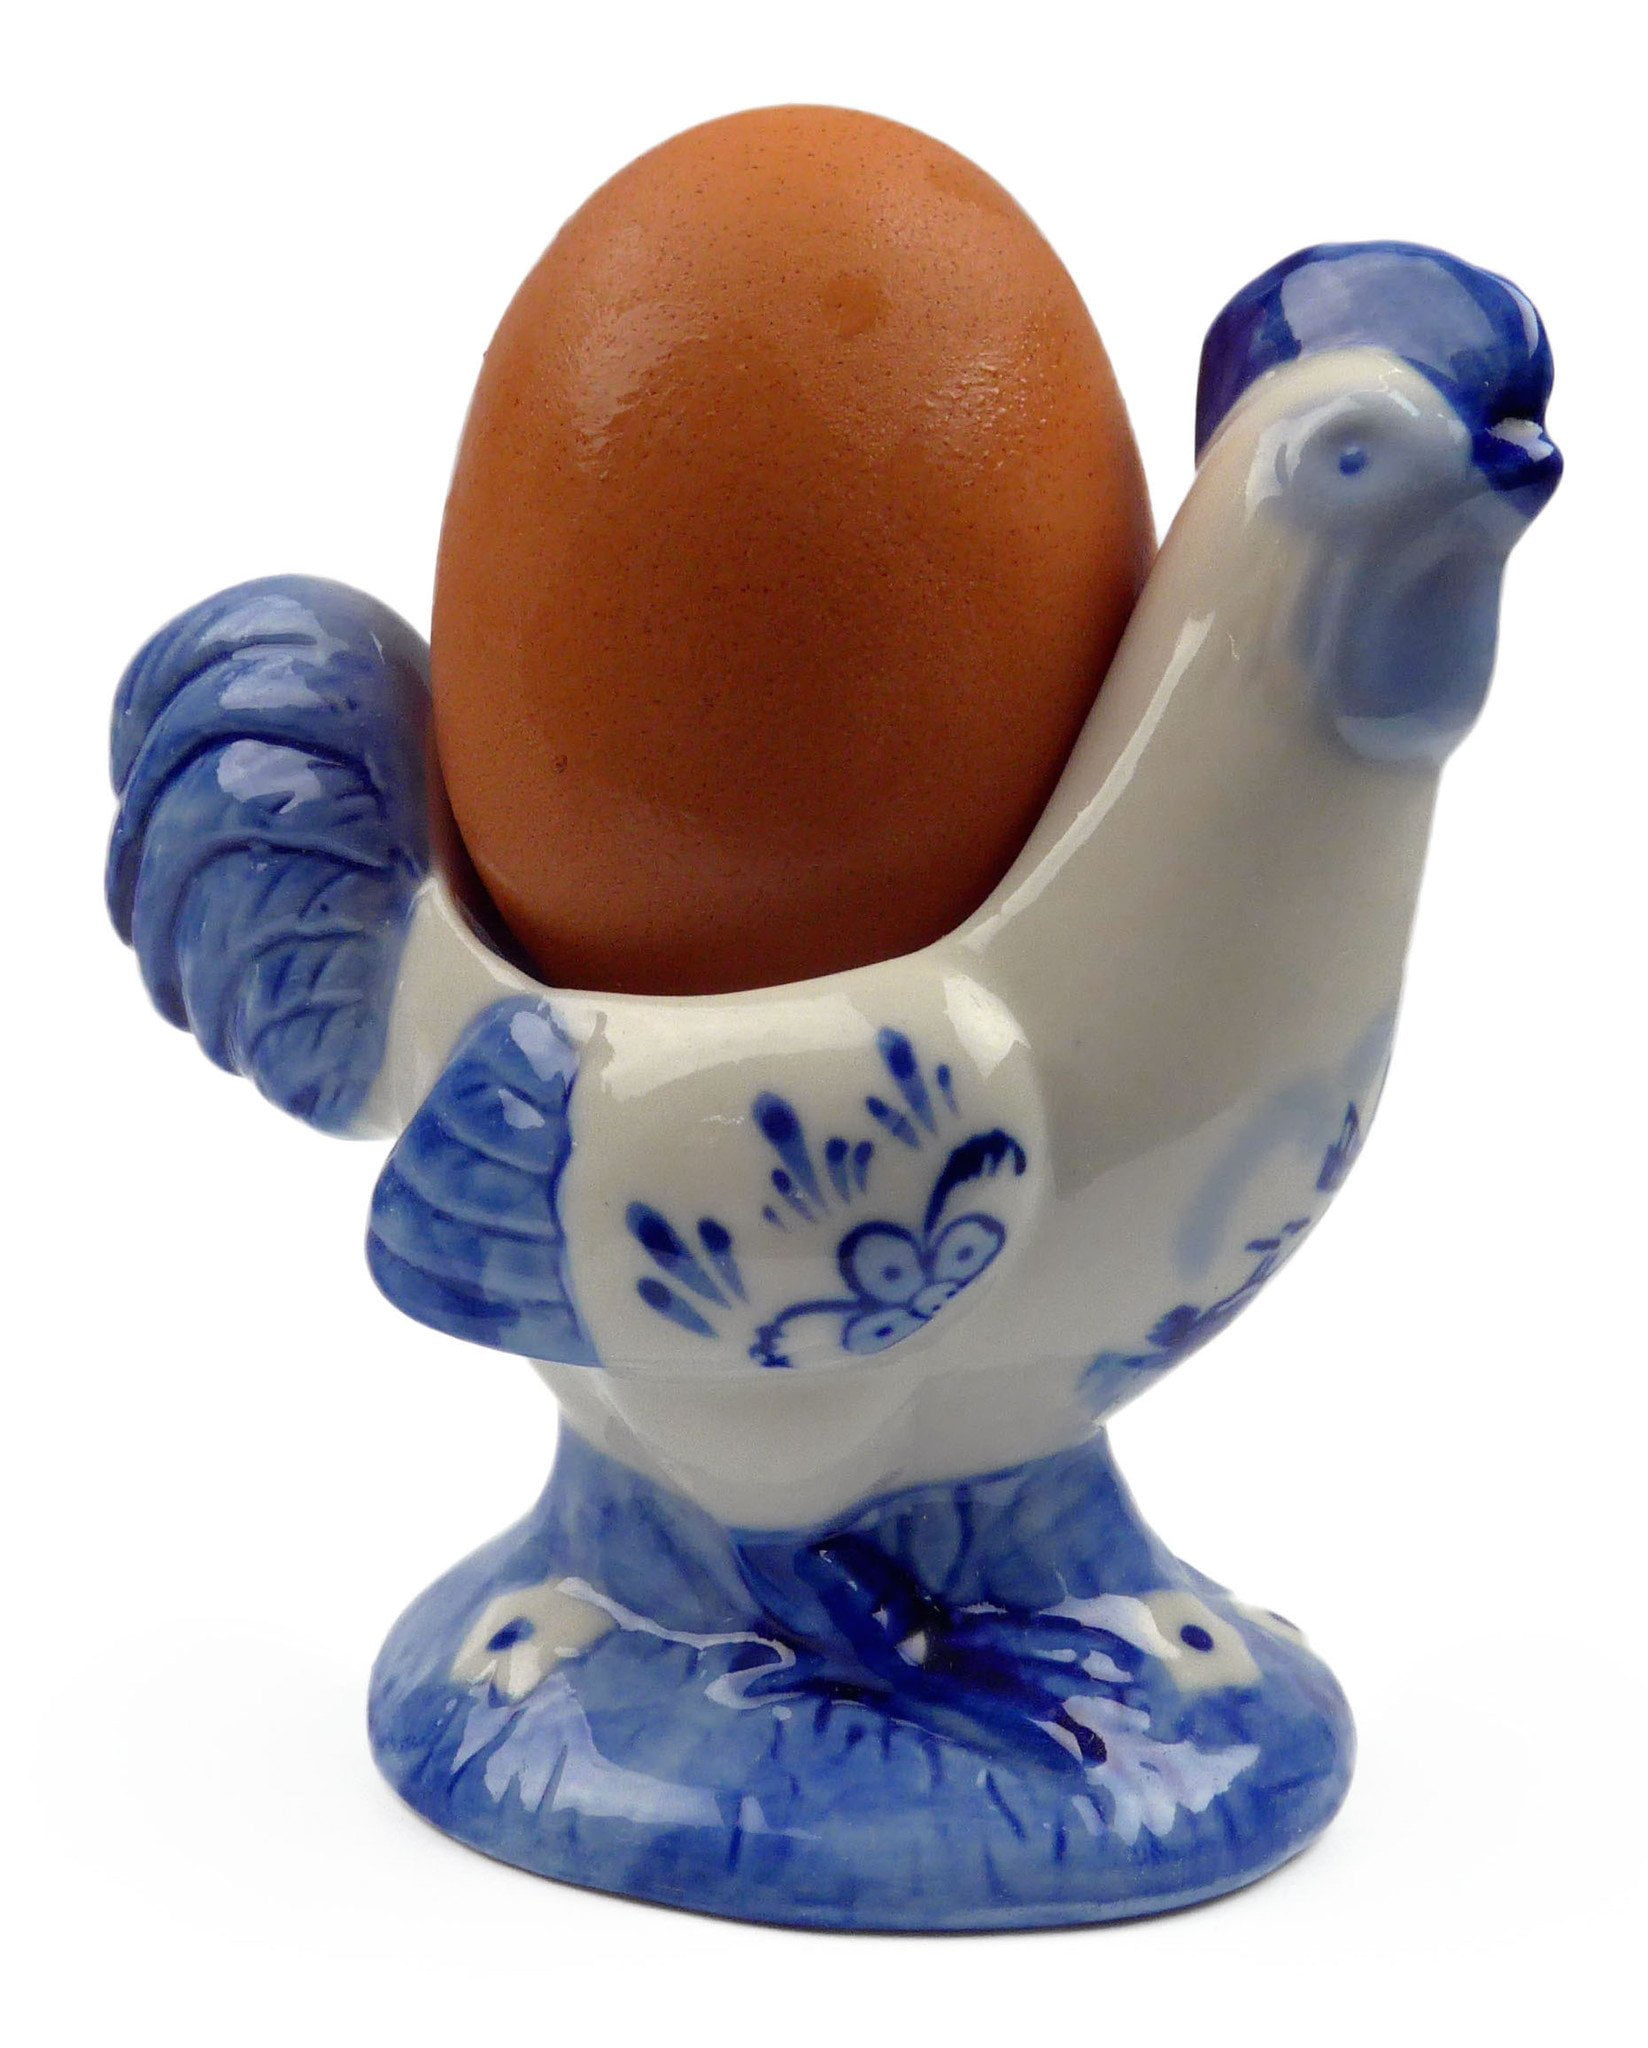 Egg Holder Egg Cup Set Ceramic Egg Holder, Teal Blue and White Polka Dot  Pottery Egg Cup Holder SET OF TWO, Housewarming, Christmas Gift 